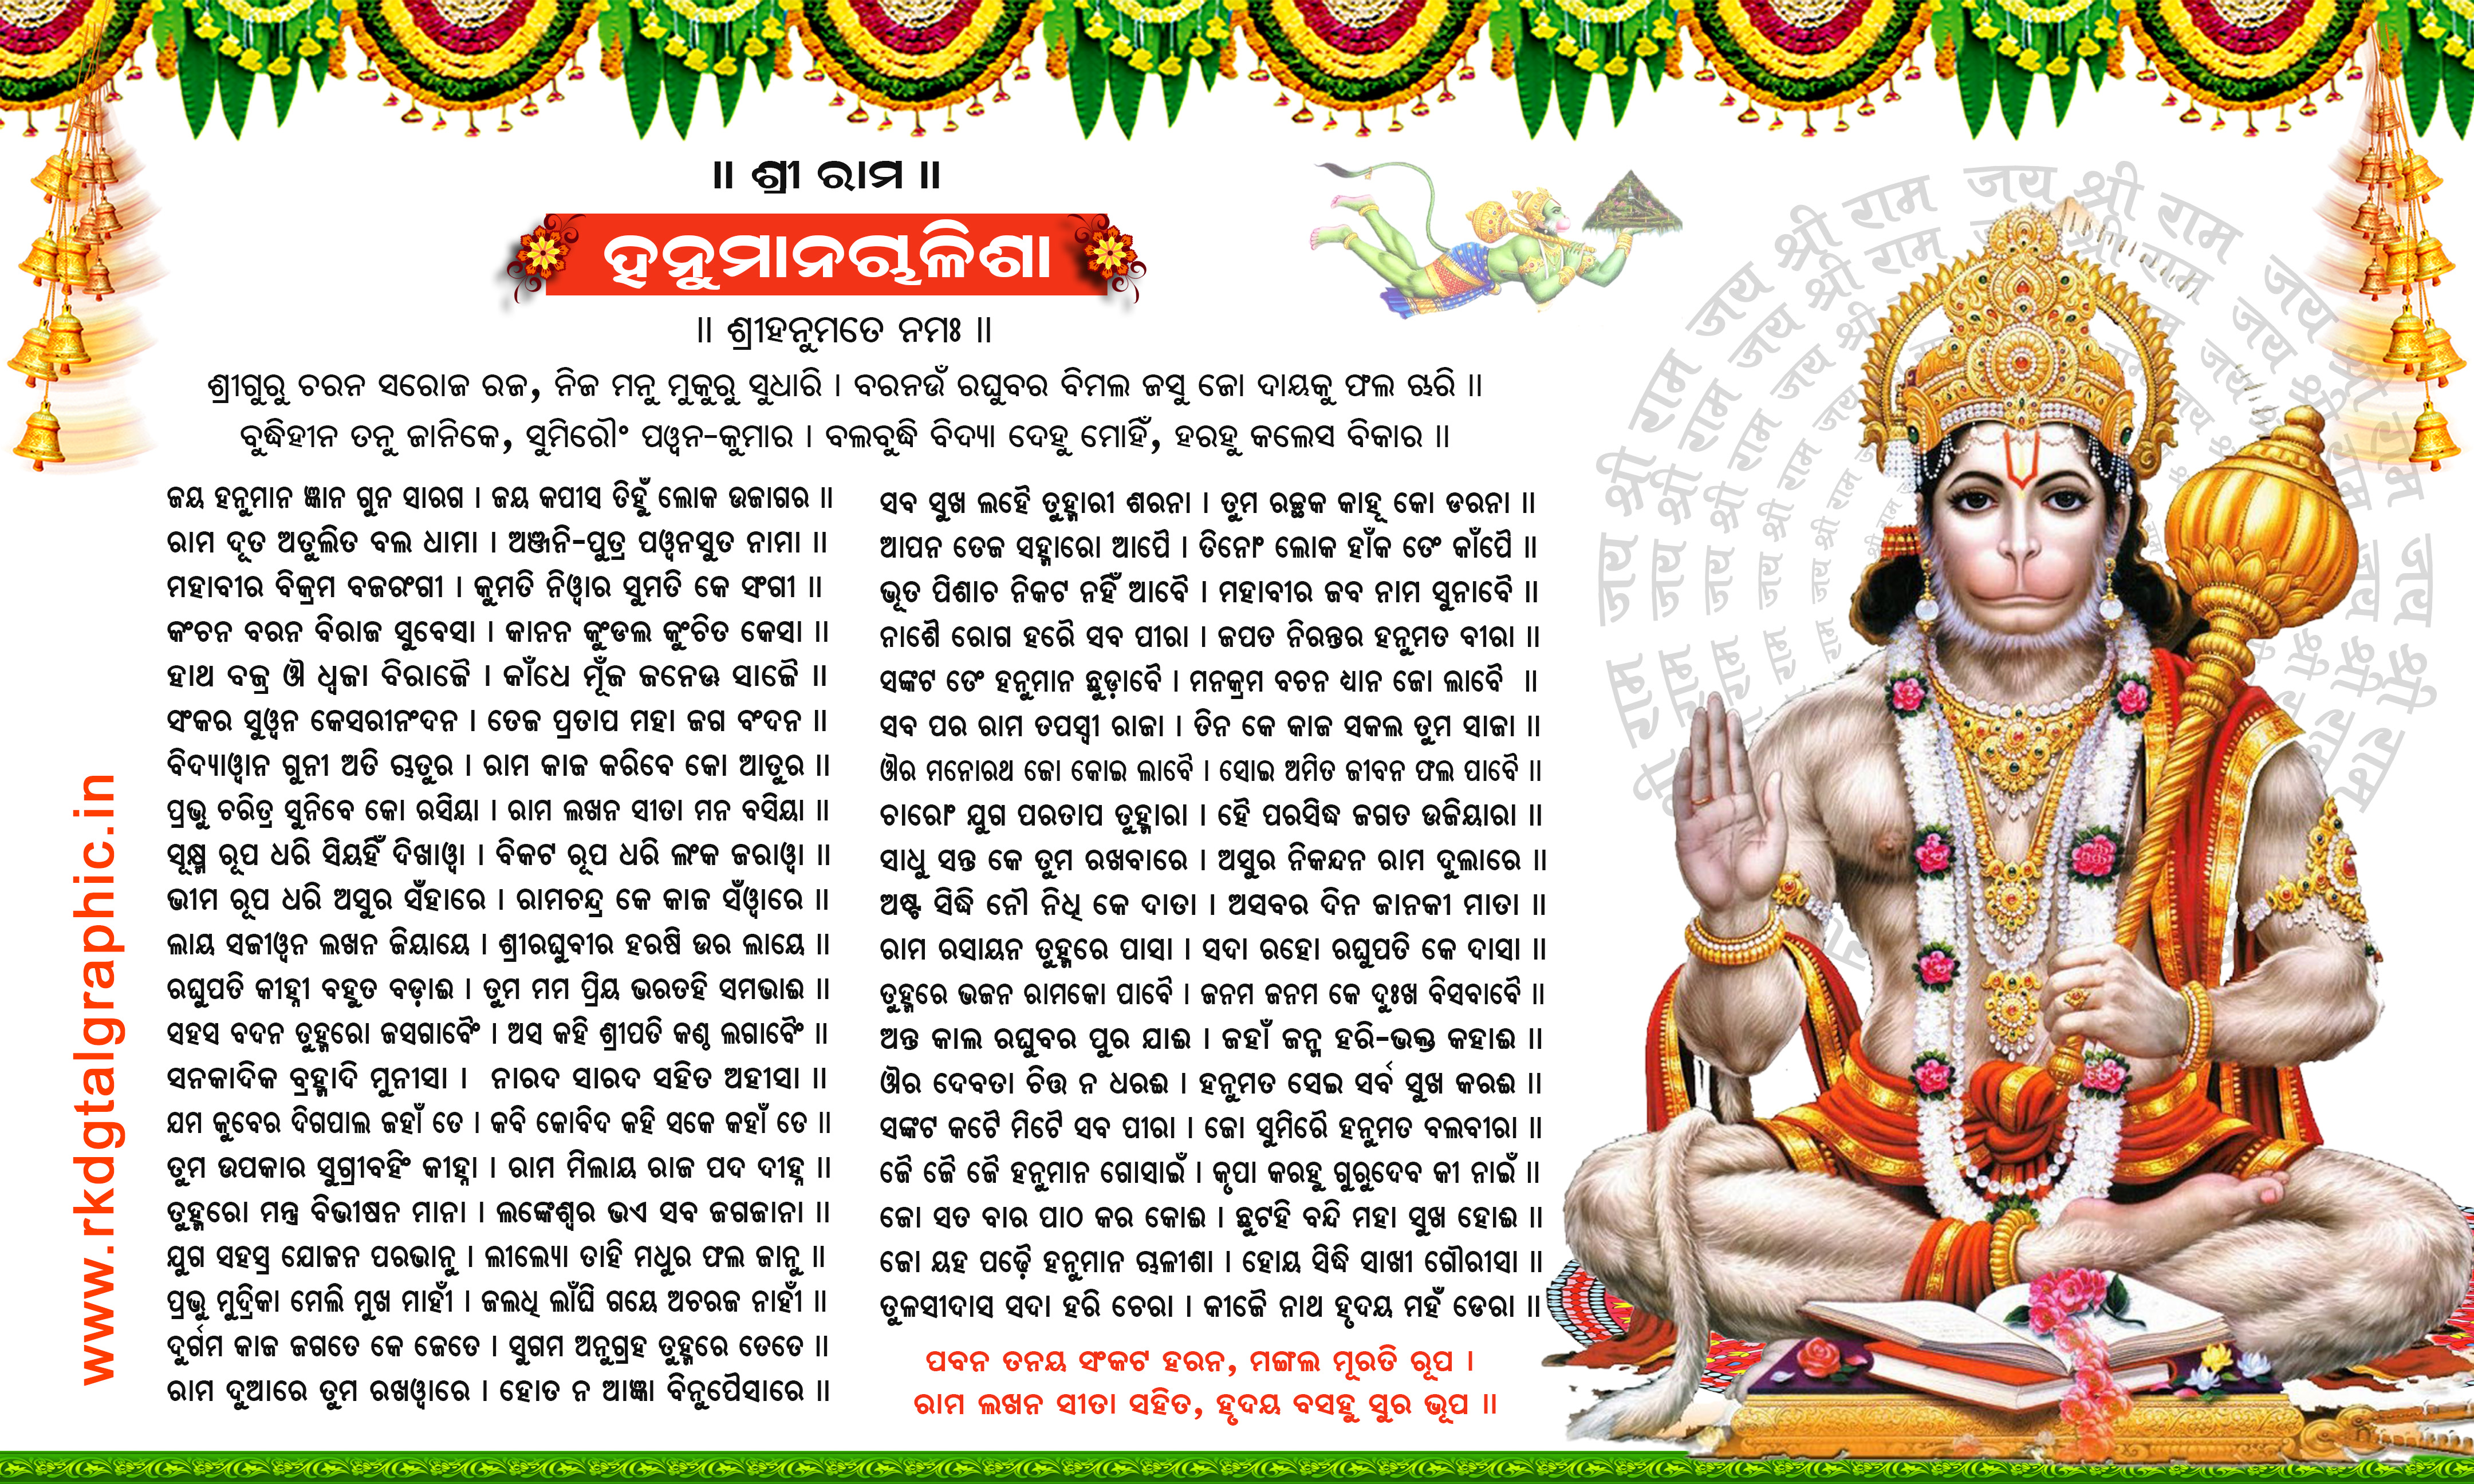 Hanuman Chalisa Lord Hanuman Devotional Bhakti Hinduism Mantra Bajrangbali Jai Hanuman Spiritual Chant Prayers Divine Ramayana Hanuman Jayanti Hanuman Bhajan